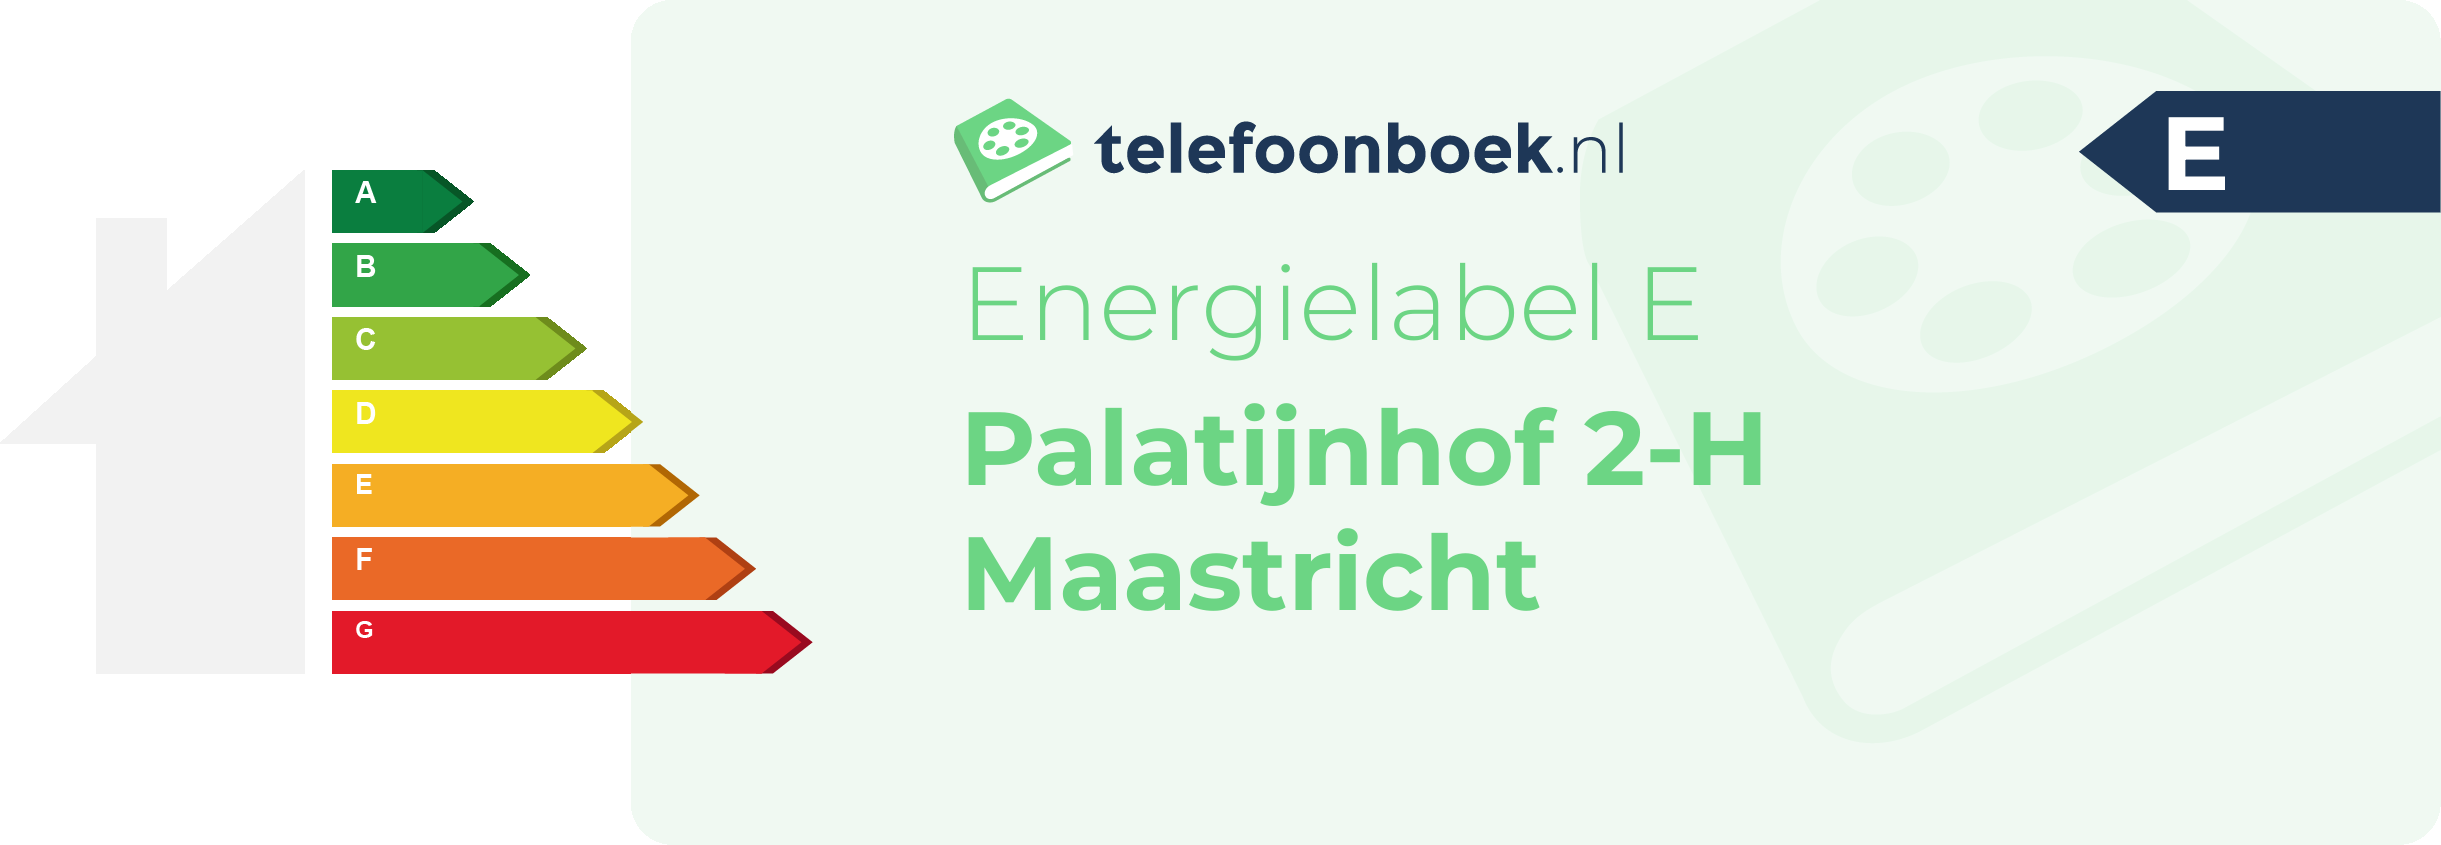 Energielabel Palatijnhof 2-H Maastricht